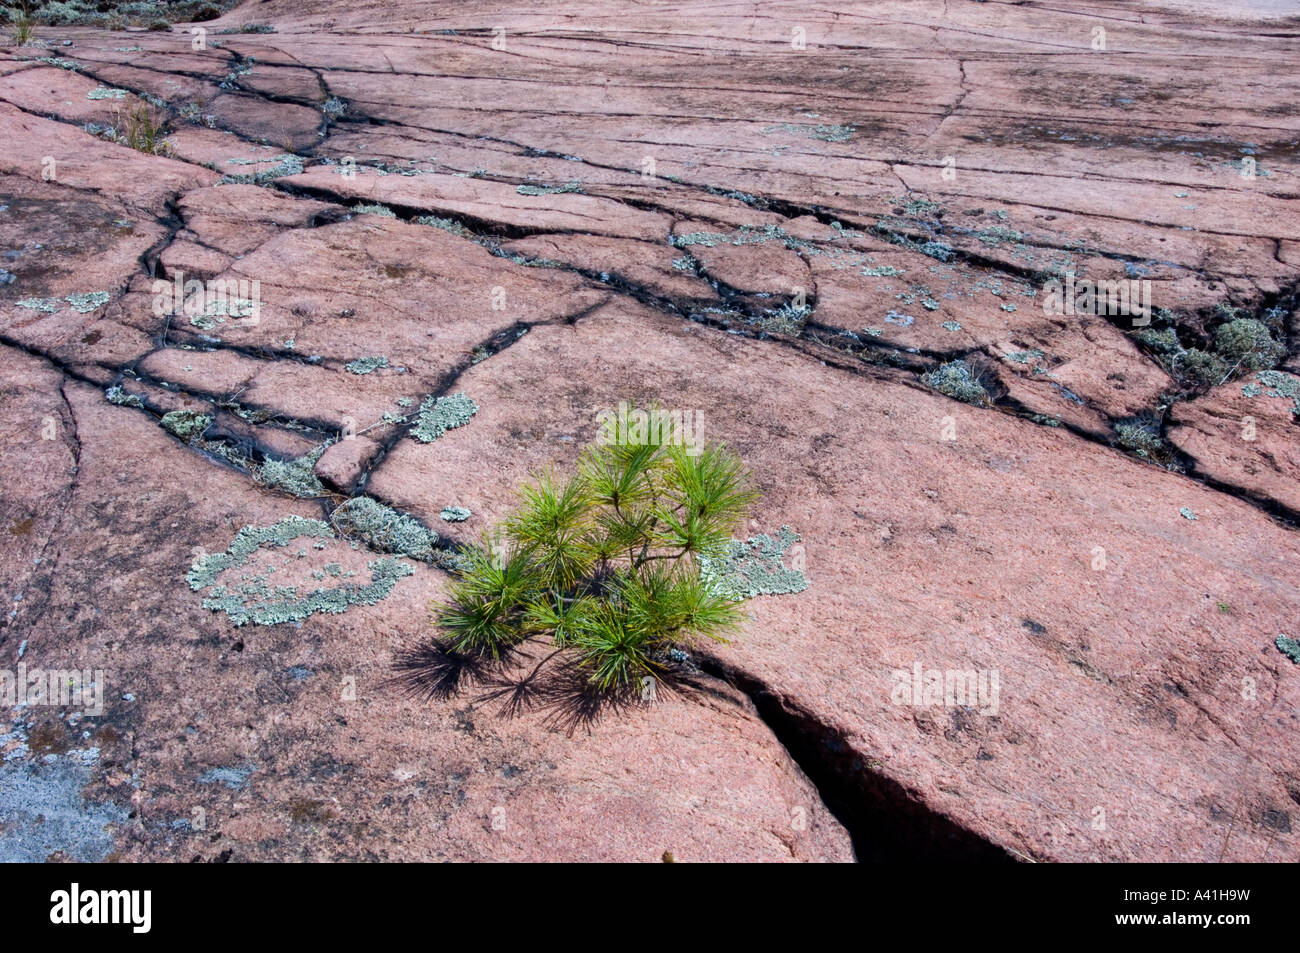 Canadian Shield rock plant community with white pine seedlings in cracks Killarney, Ontario, Canada Stock Photo